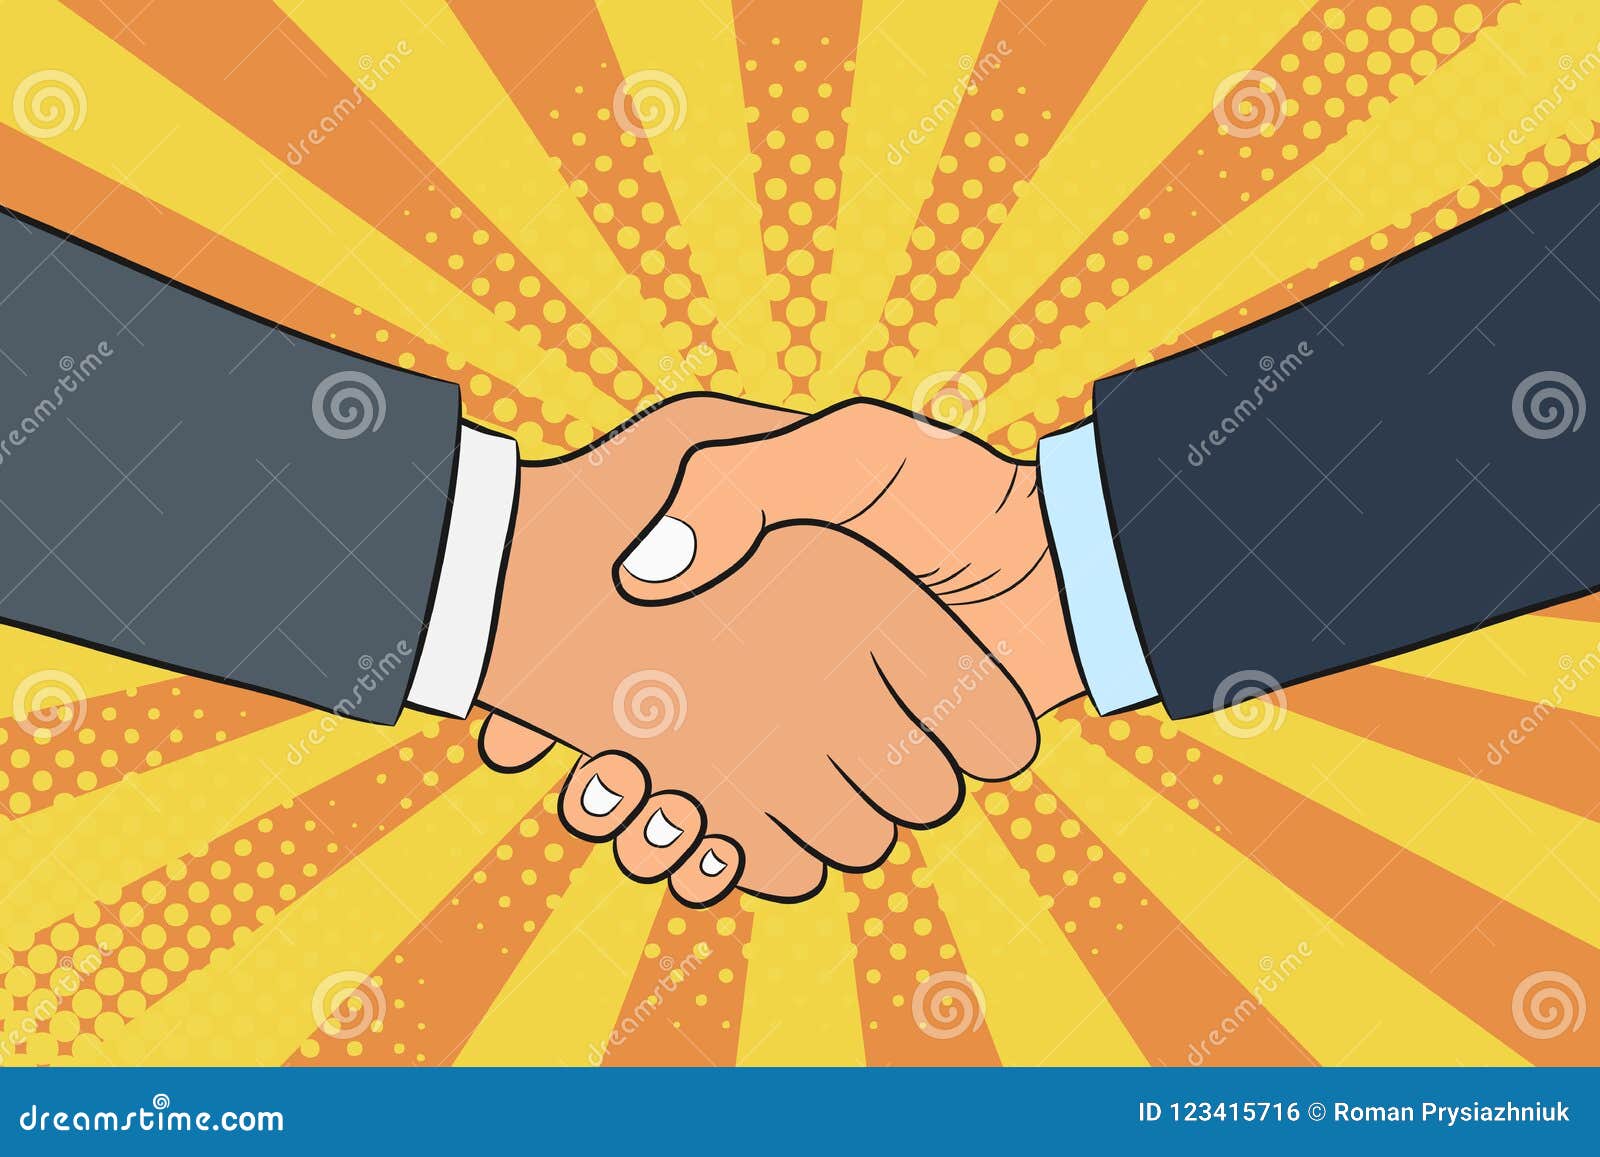 handshake  in pop art style. businessmans shake hands. partnership and teamwork concept.